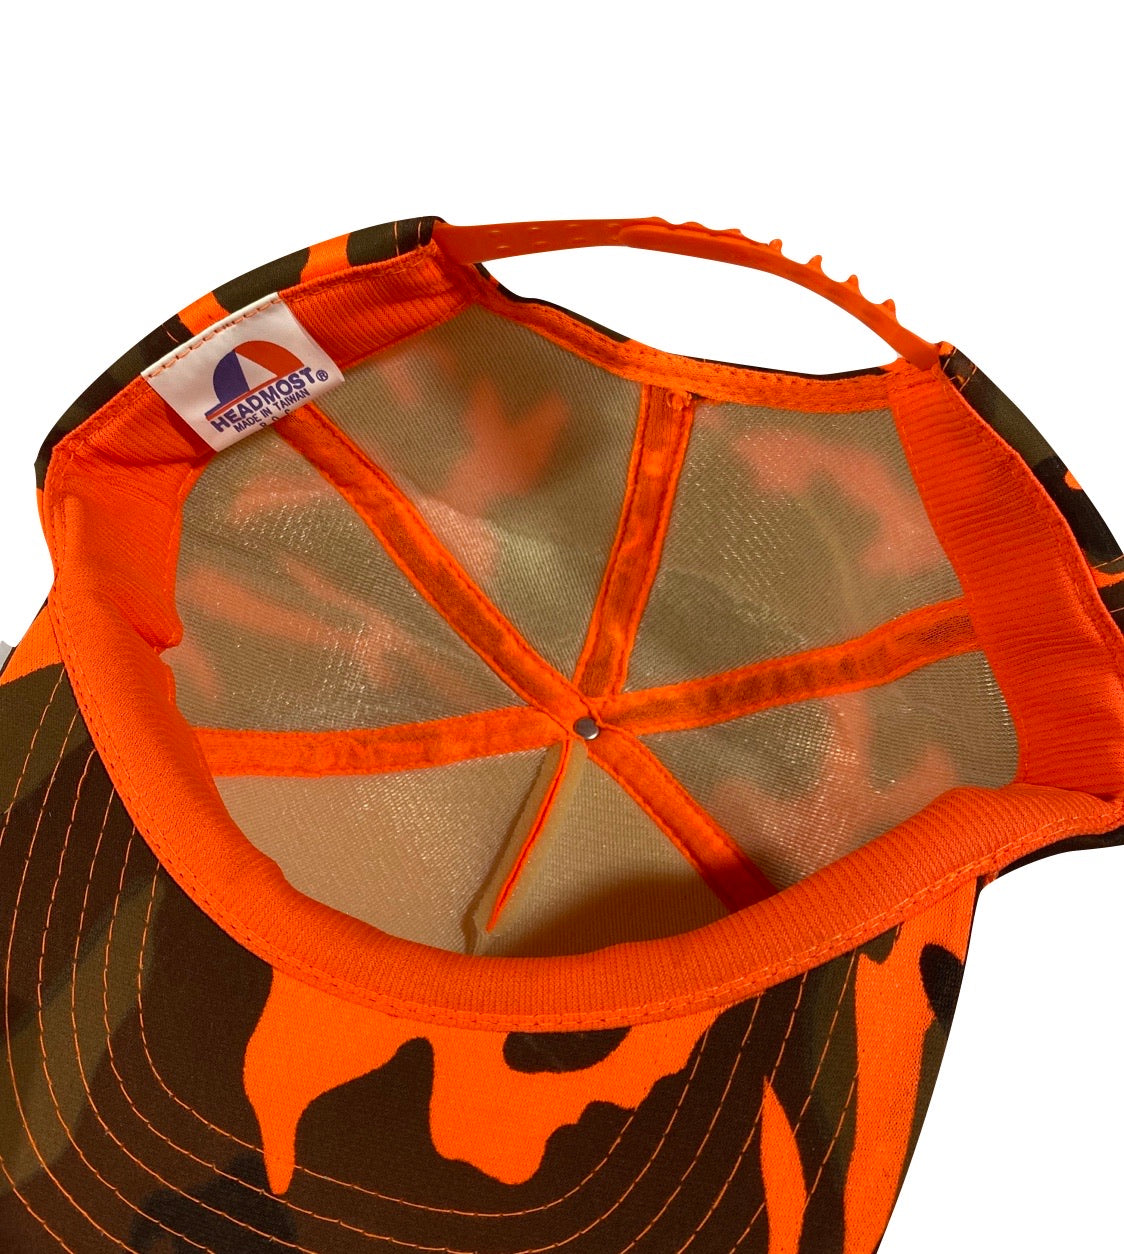 Retro Trucker Cap for Sublimation Camo Colors, 12 Each - Orange/Camo